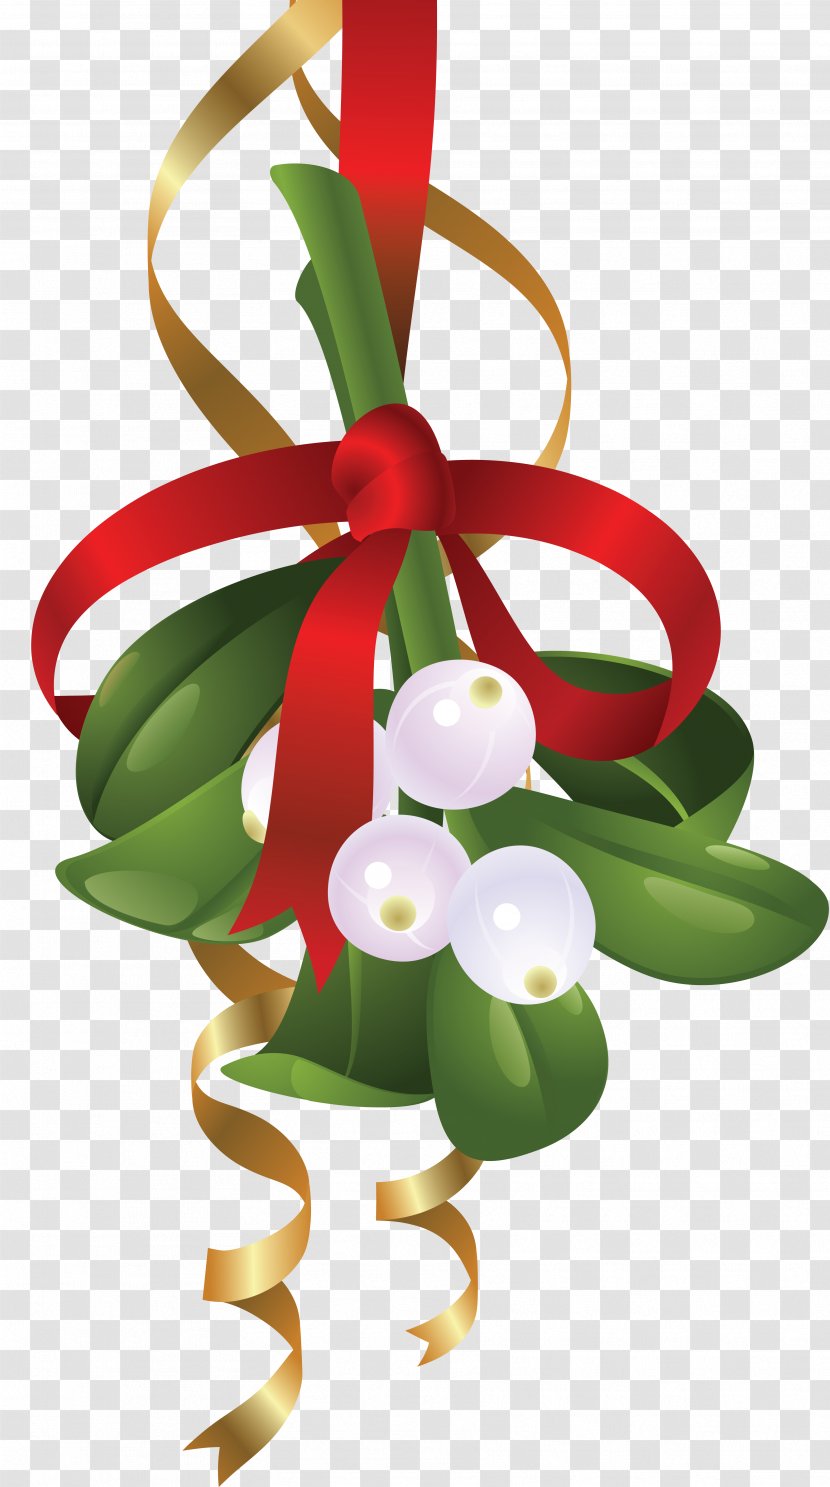 Mistletoe Clip Art Illustration Image - Canada Day Celebration Ribbon Christmas Transparent PNG